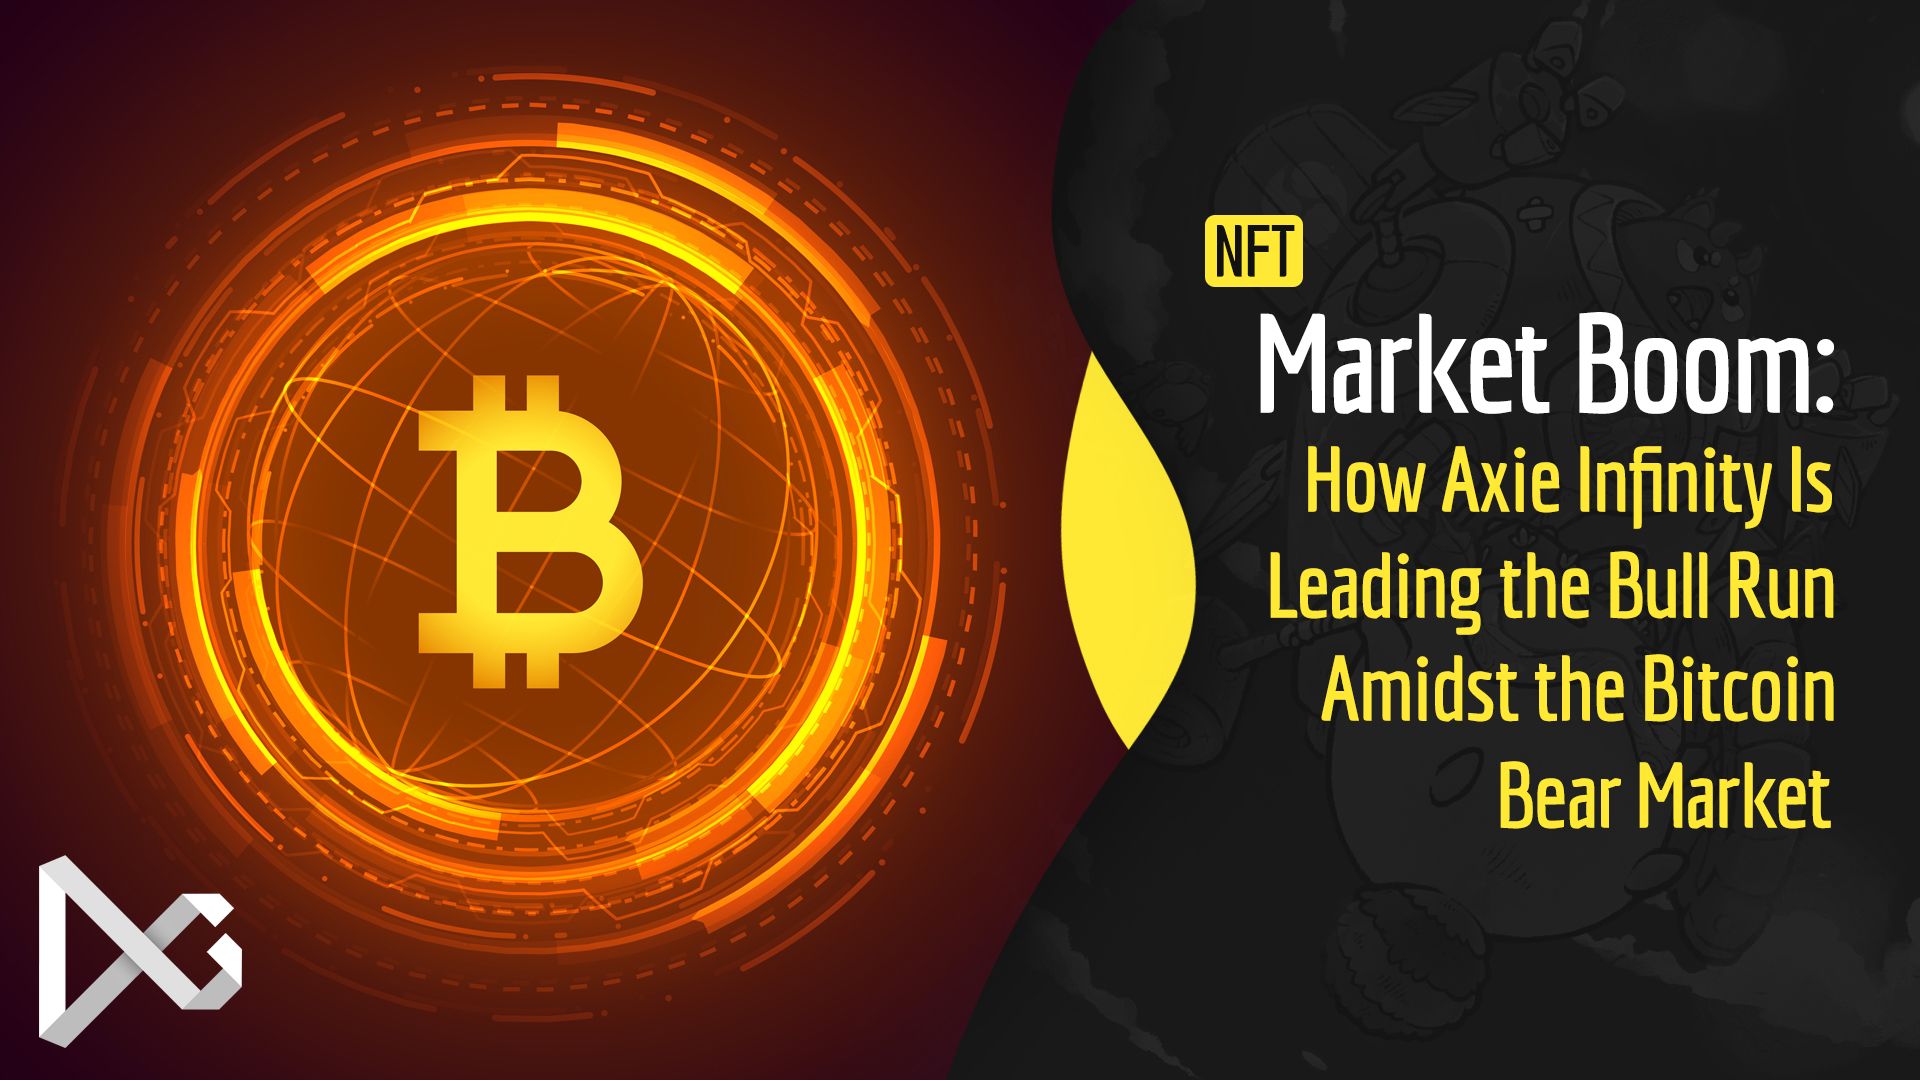 NFT Market Boom: How Axie Infinity Is Leading the Bull Run Amidst the Bitcoin Bear Market